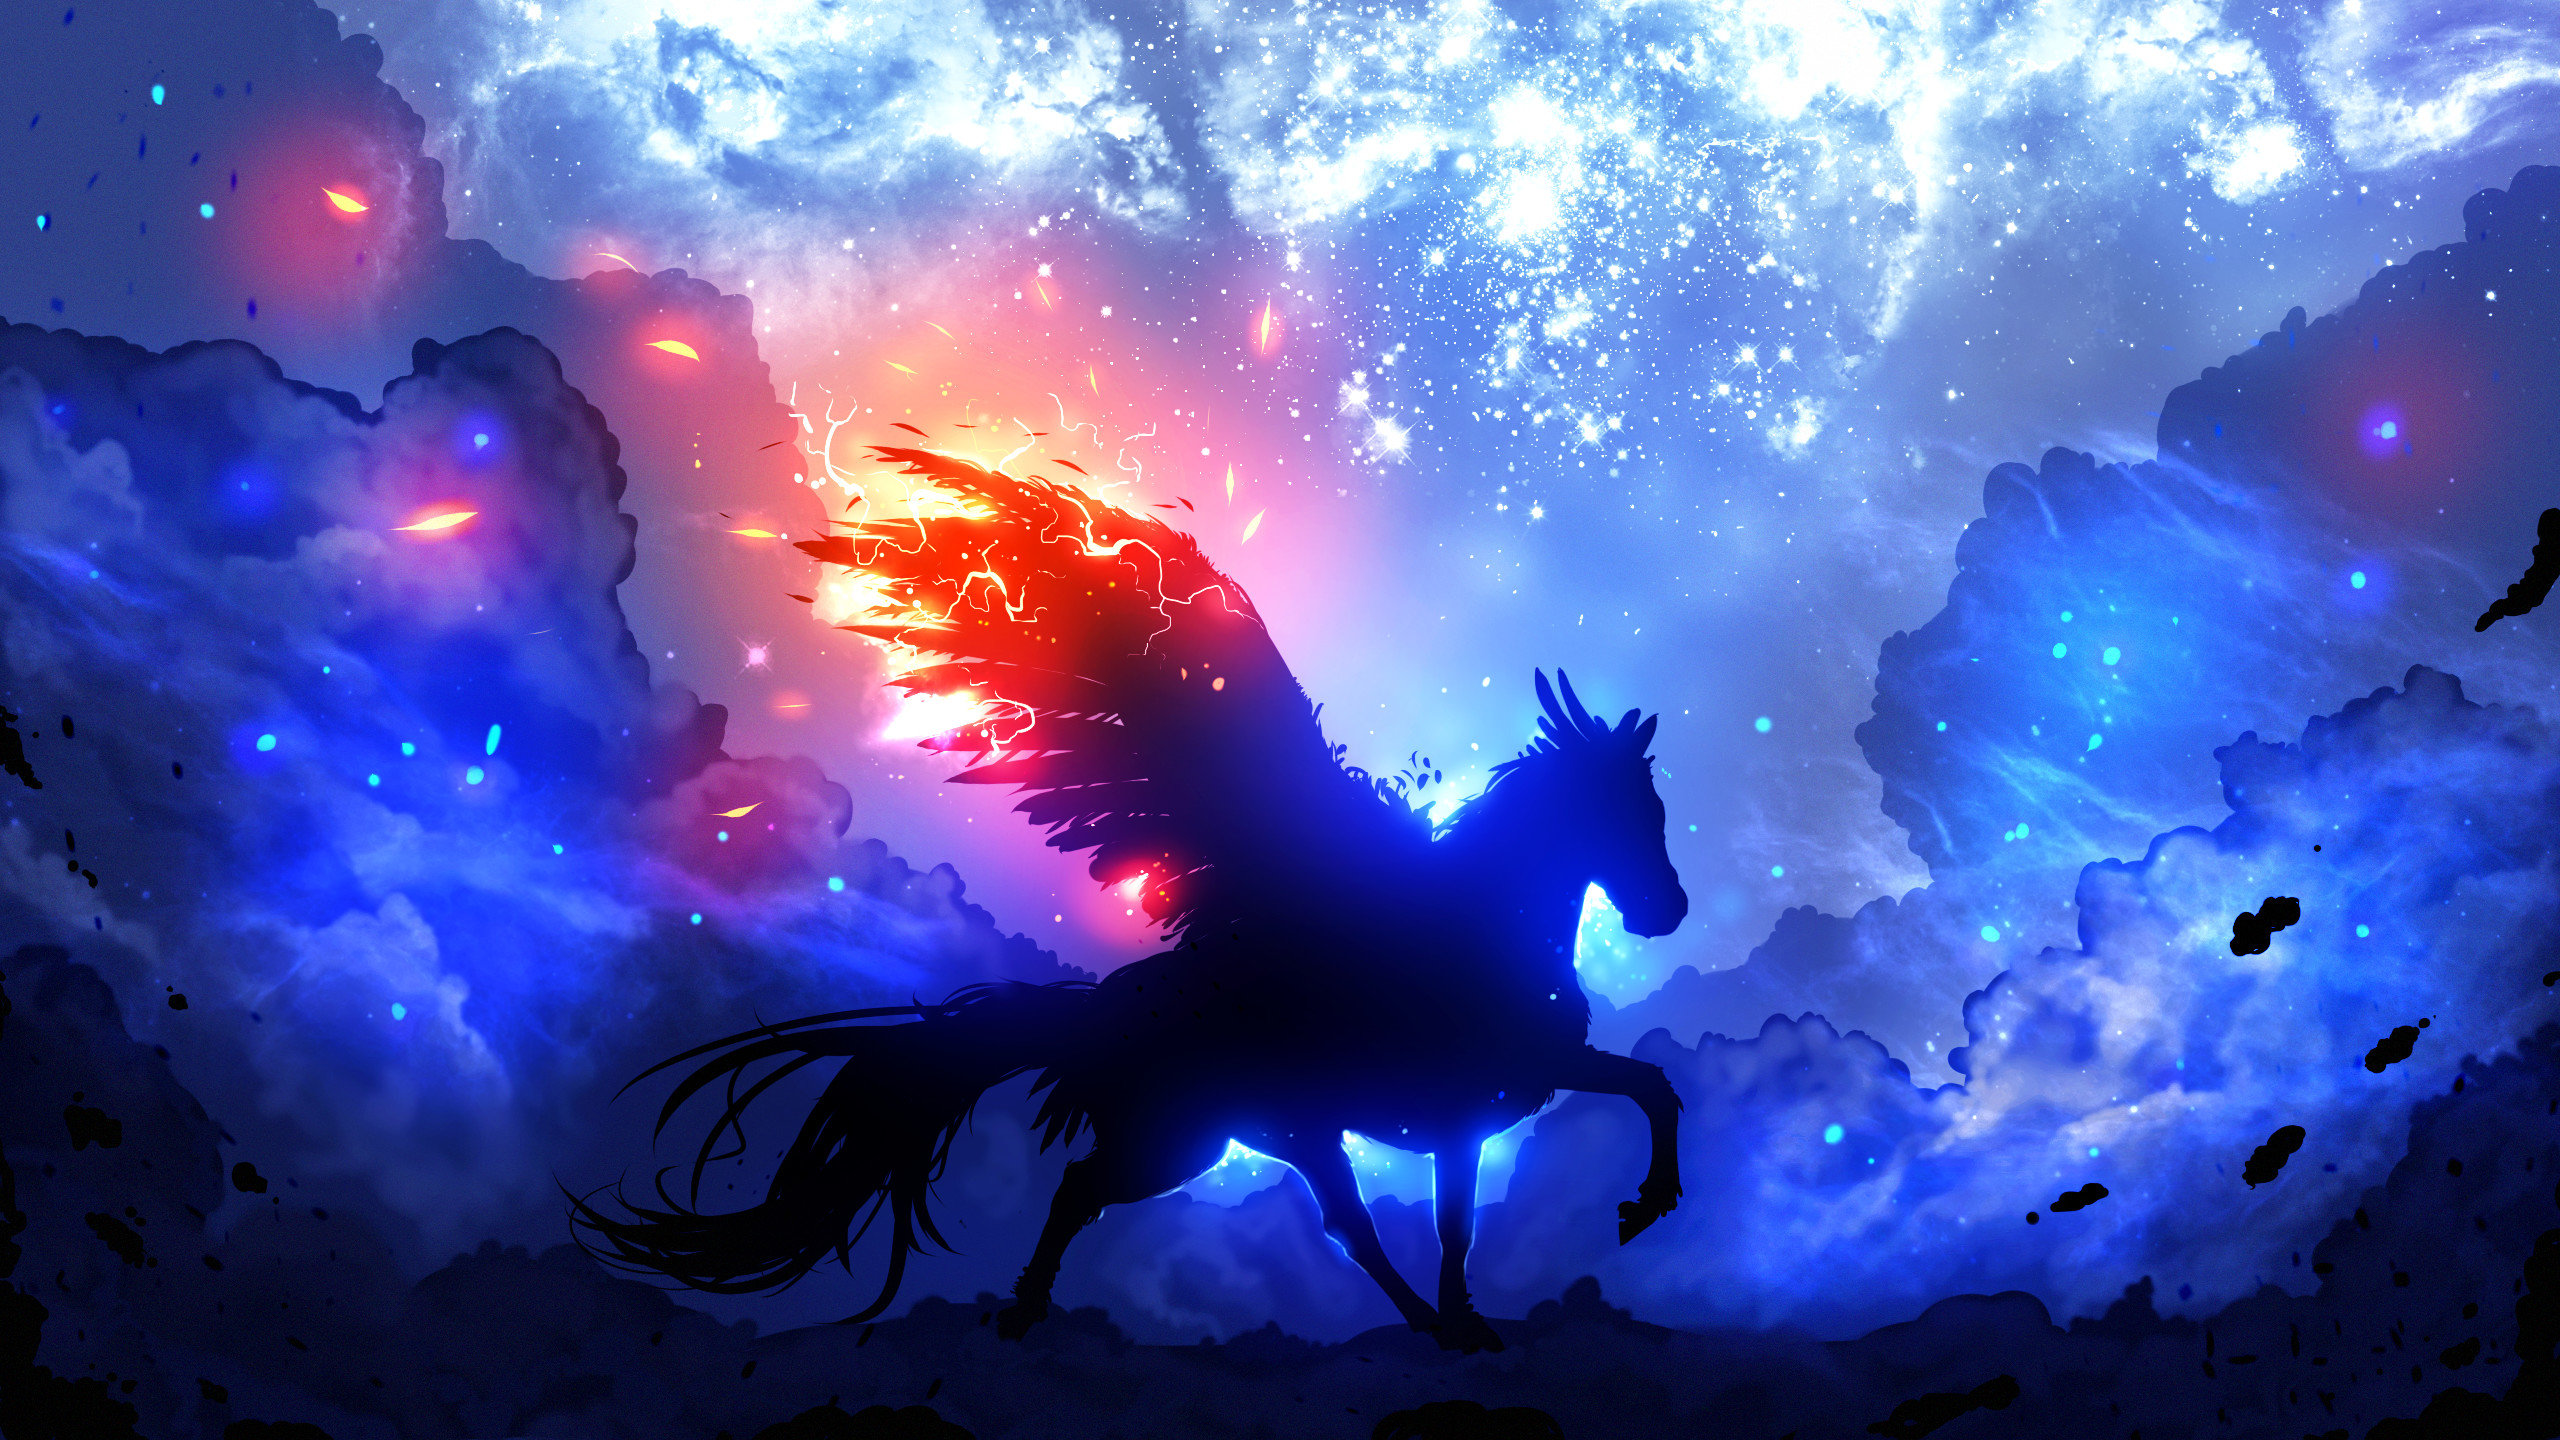 Download hd 2560x1440 Horse Fantasy desktop background ID282530